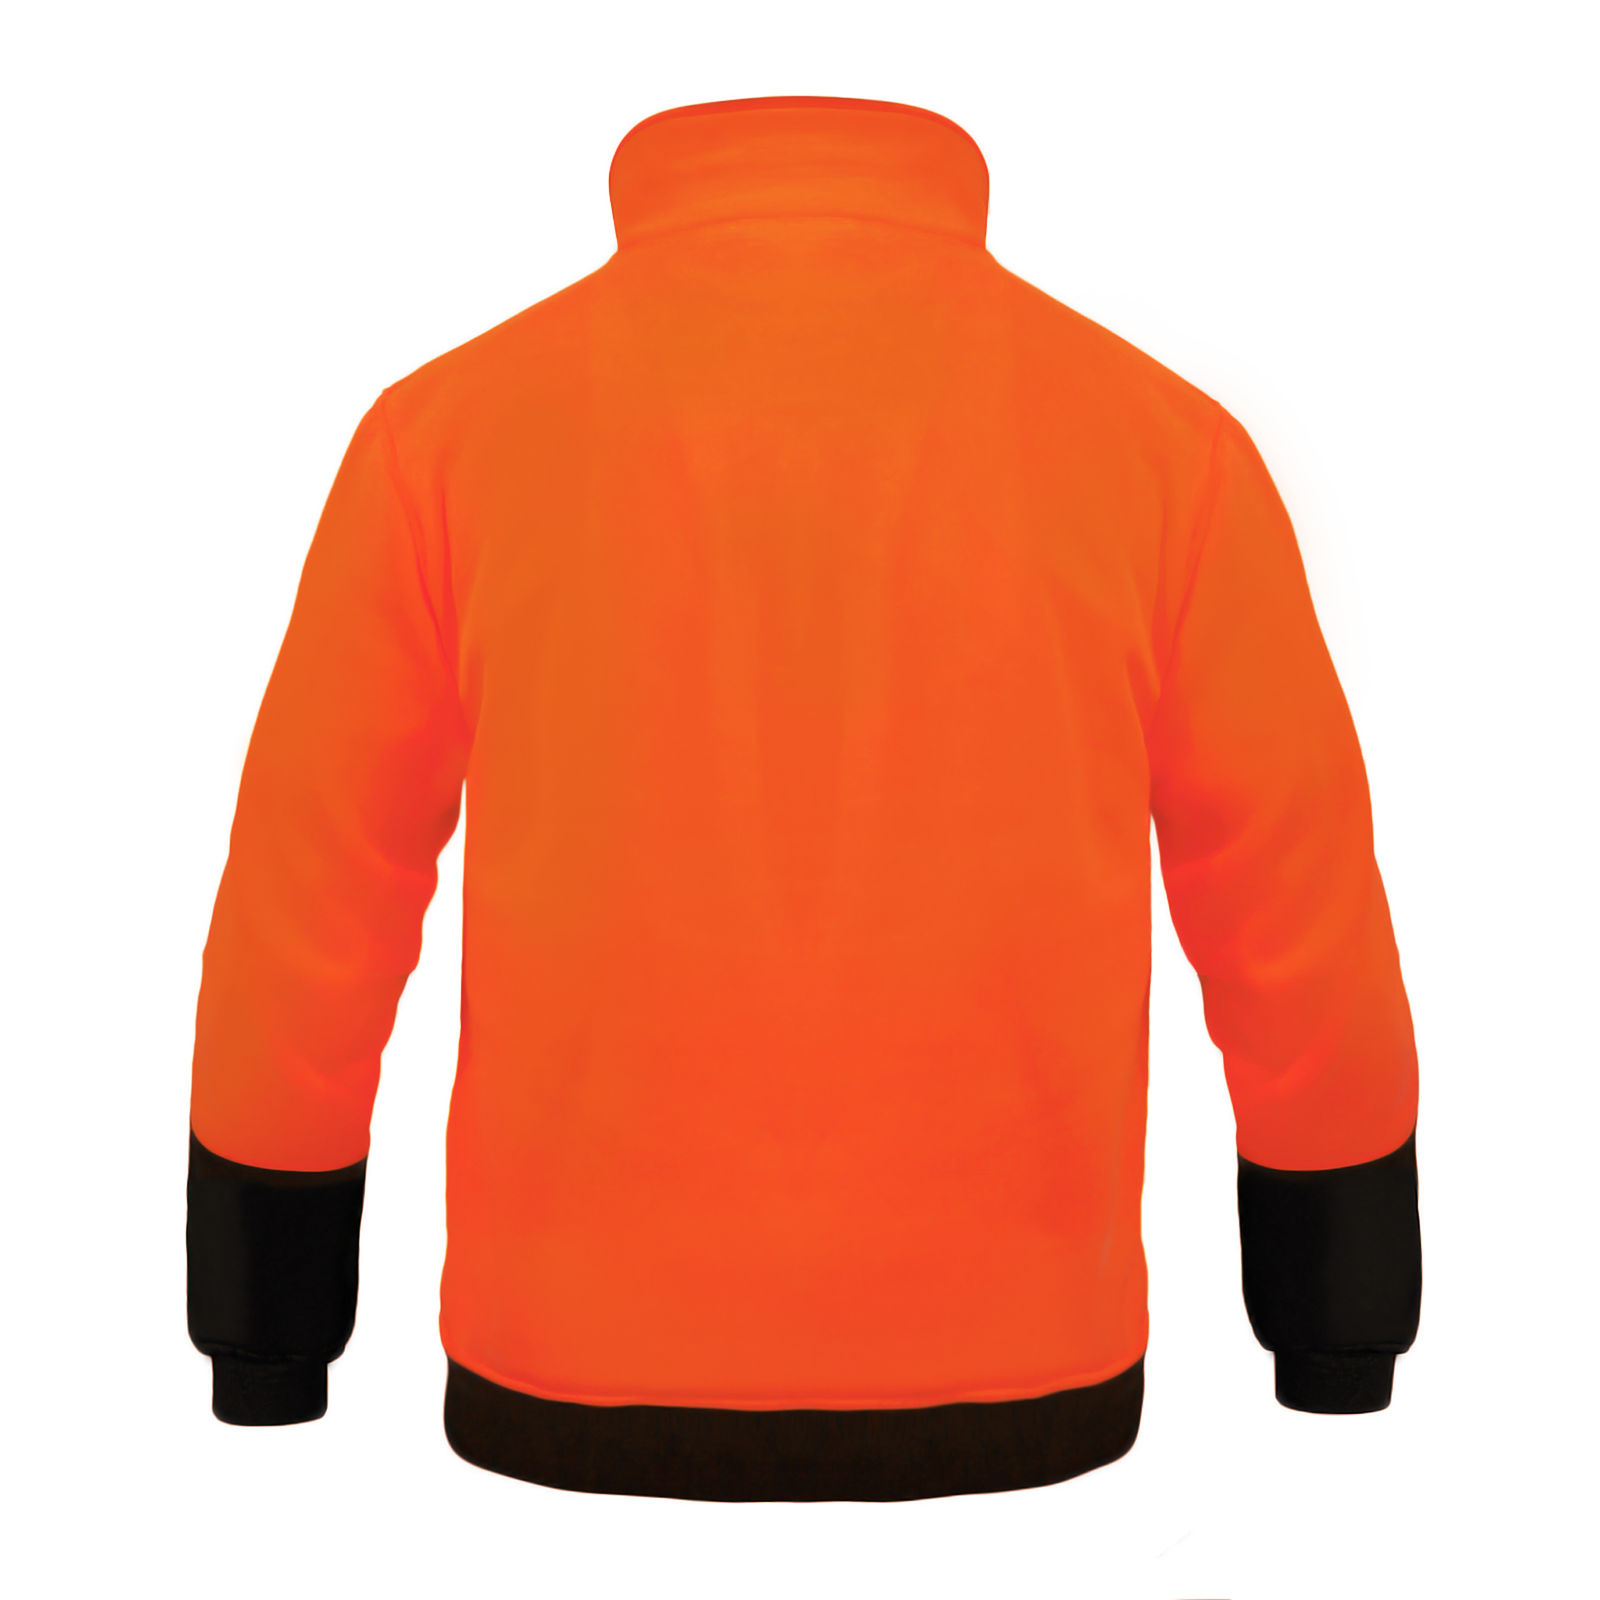 hi-vis orange JORESTECH sweatshirt. Sweater has a black stand up collar, half a zipper and a pocket chest that closes with a black zipper.